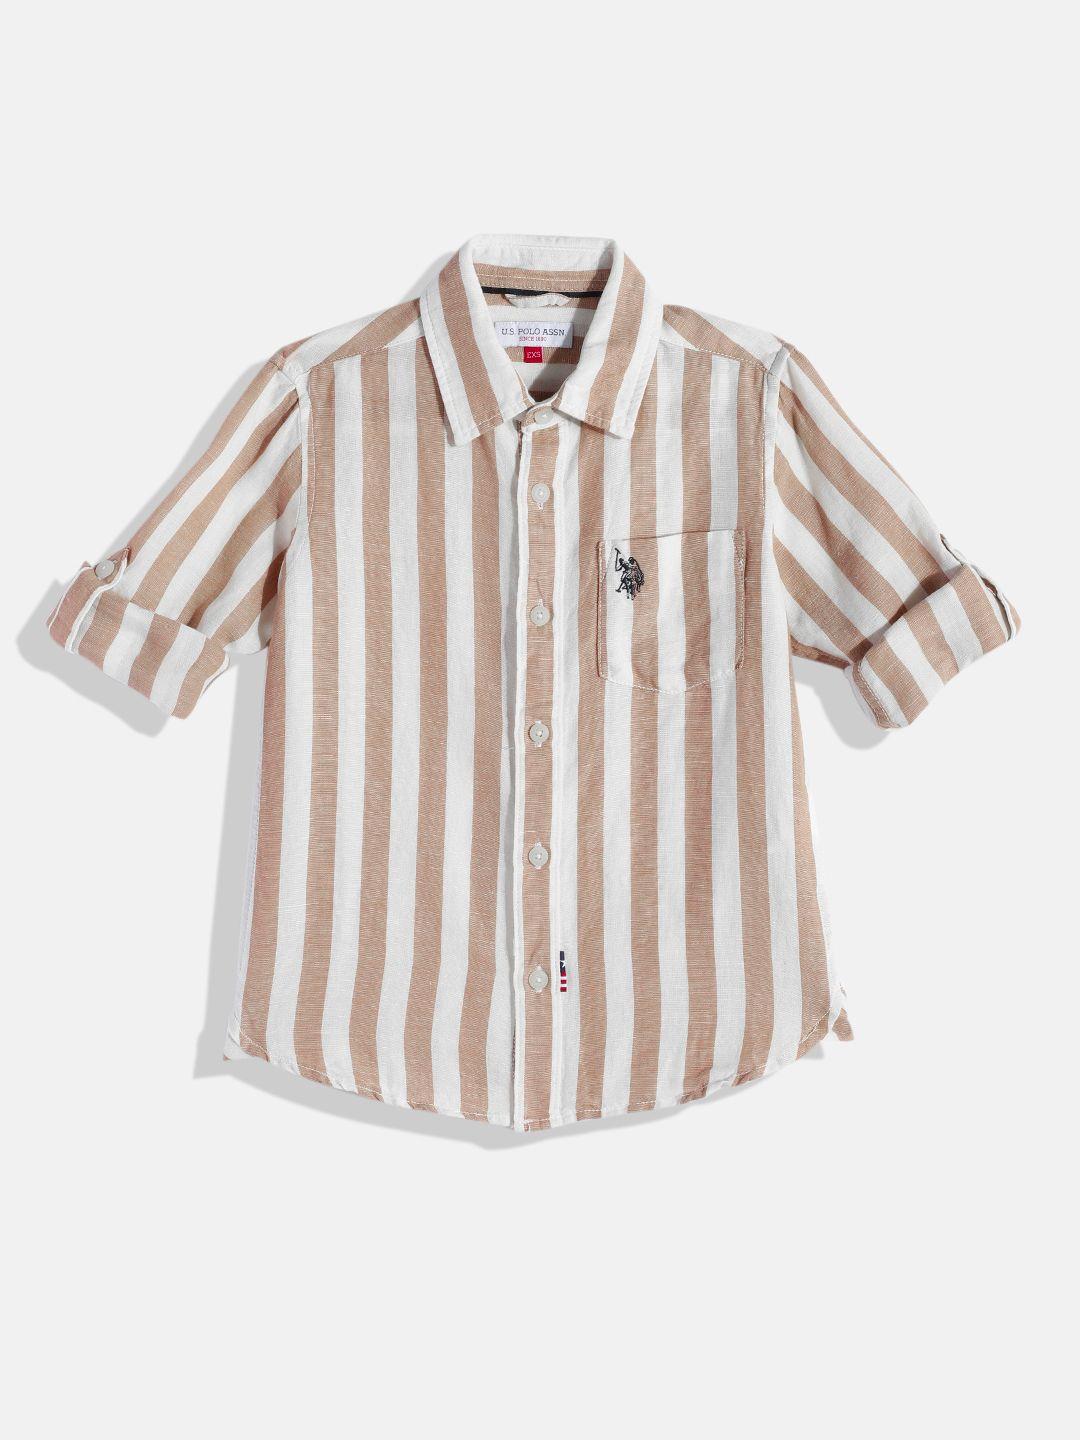 u.s. polo assn. kids white striped casual shirt